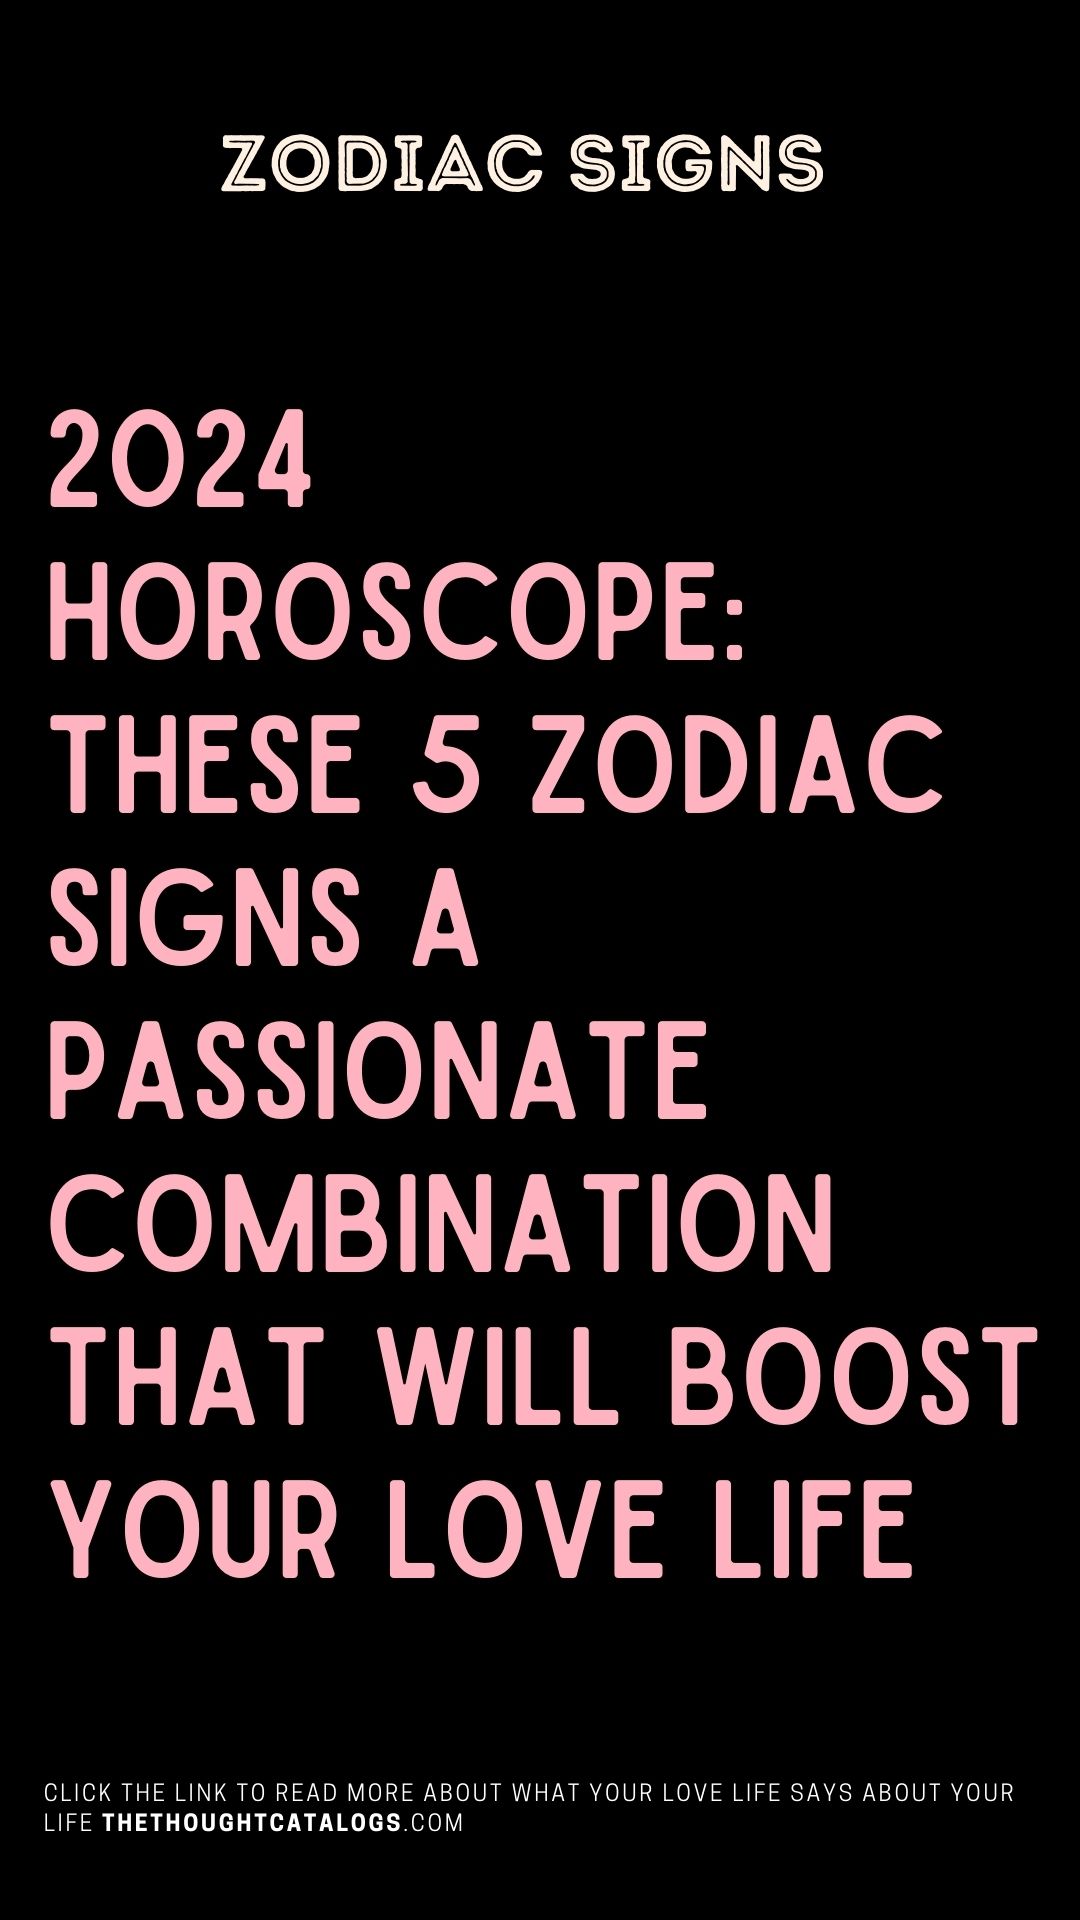 2024 Horoscope 5 Zodiacs Passionate Combination Will Boost Love Life